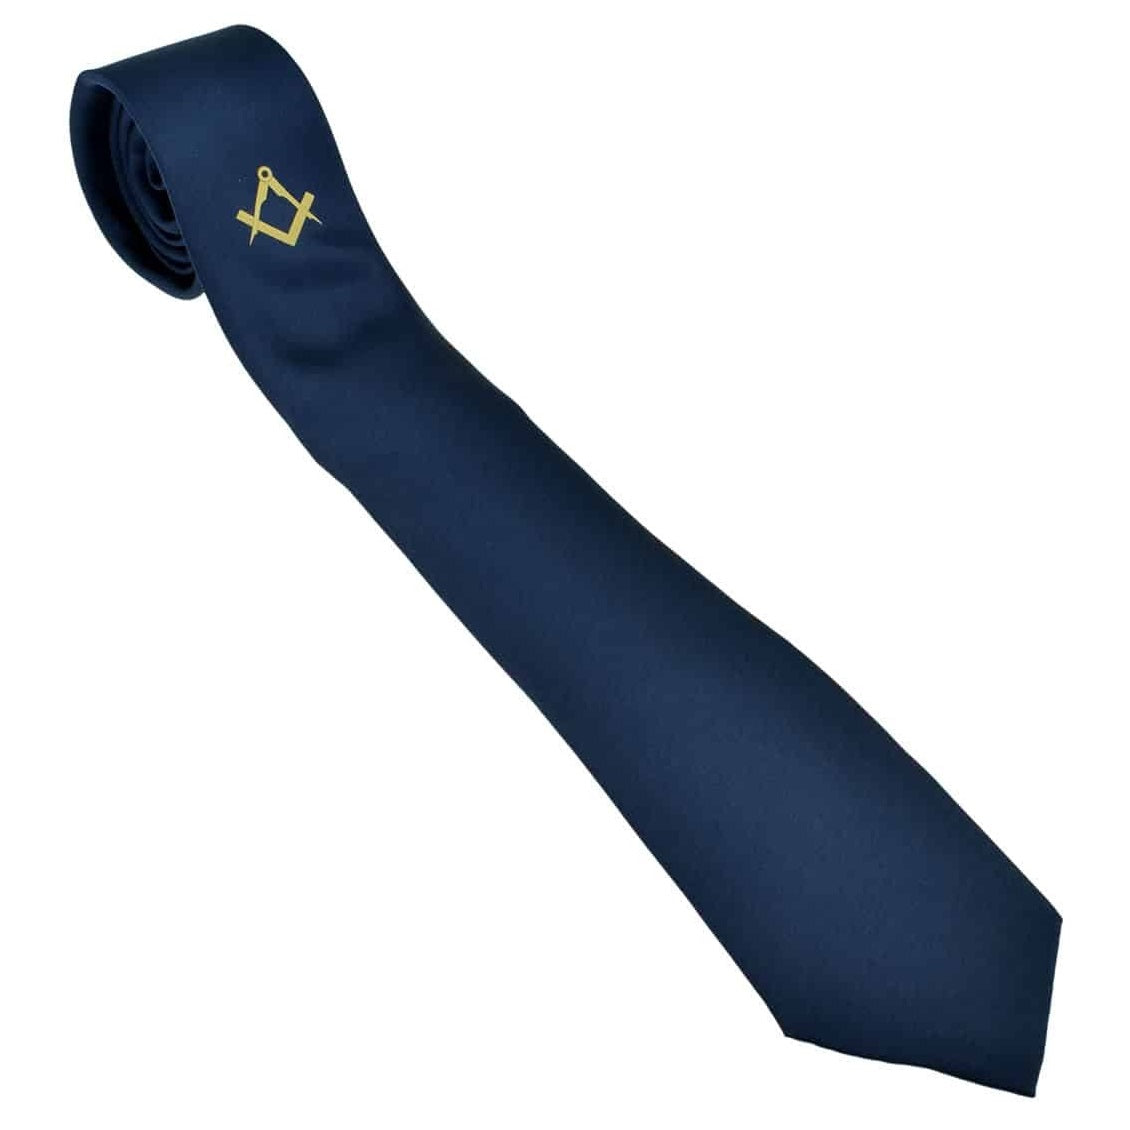 Masonic Tie - Mens With Gold Masonic Design - Navy